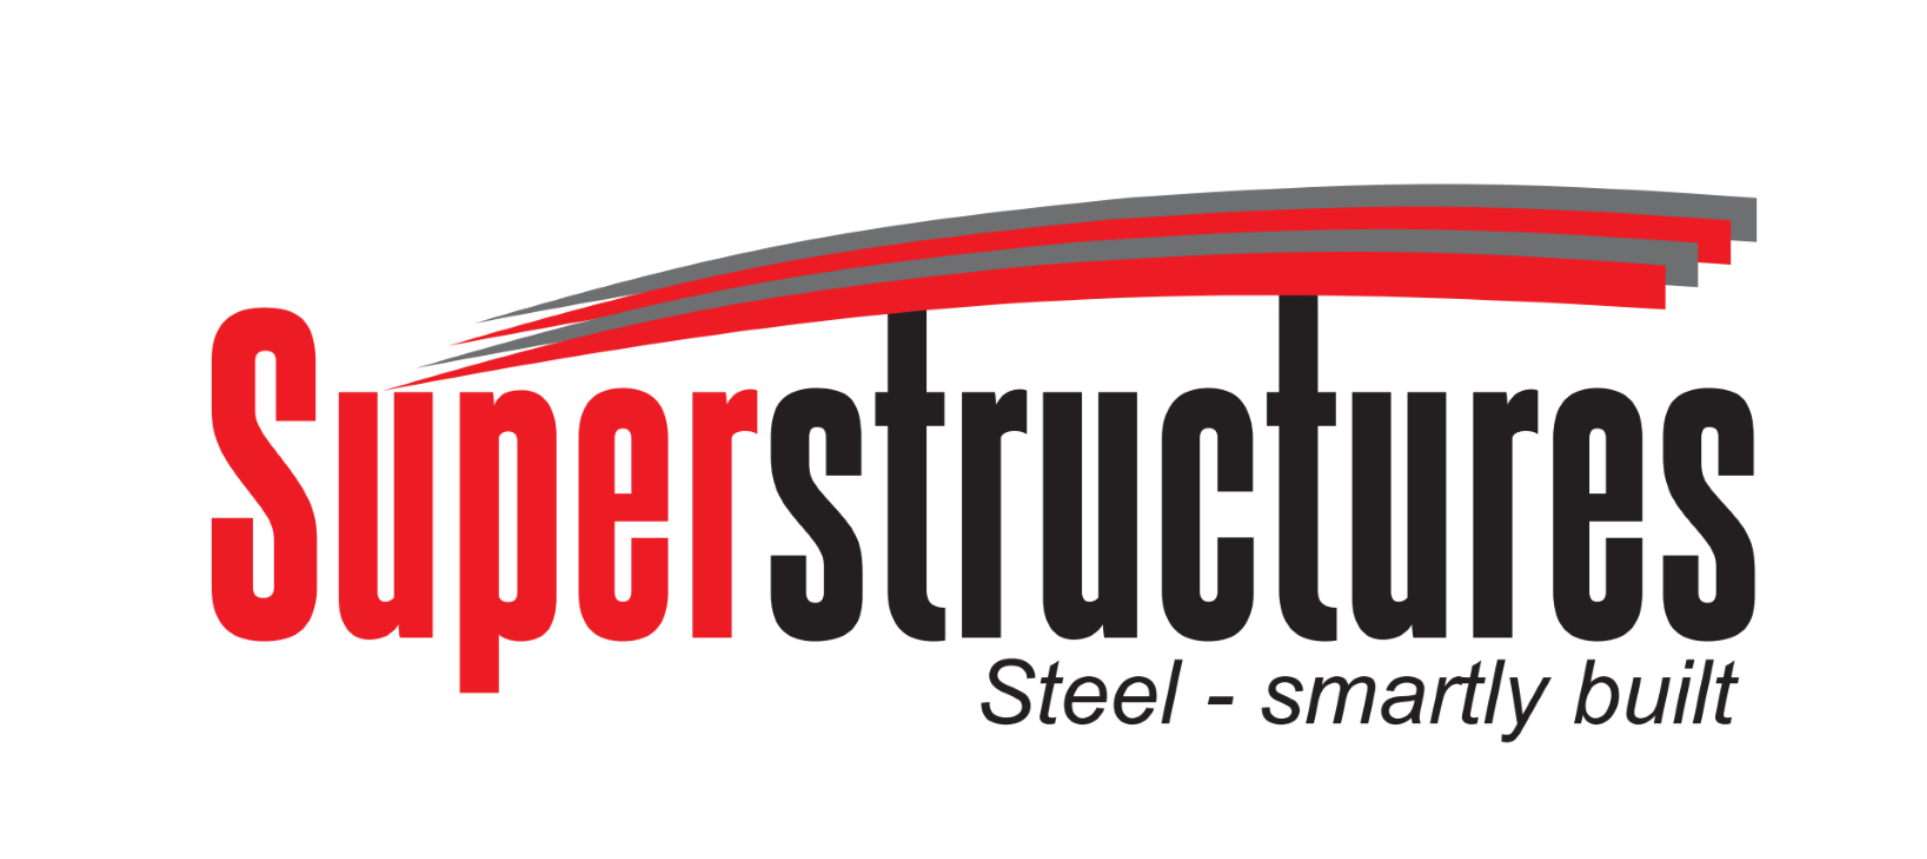 Superstructures transparent logo High res